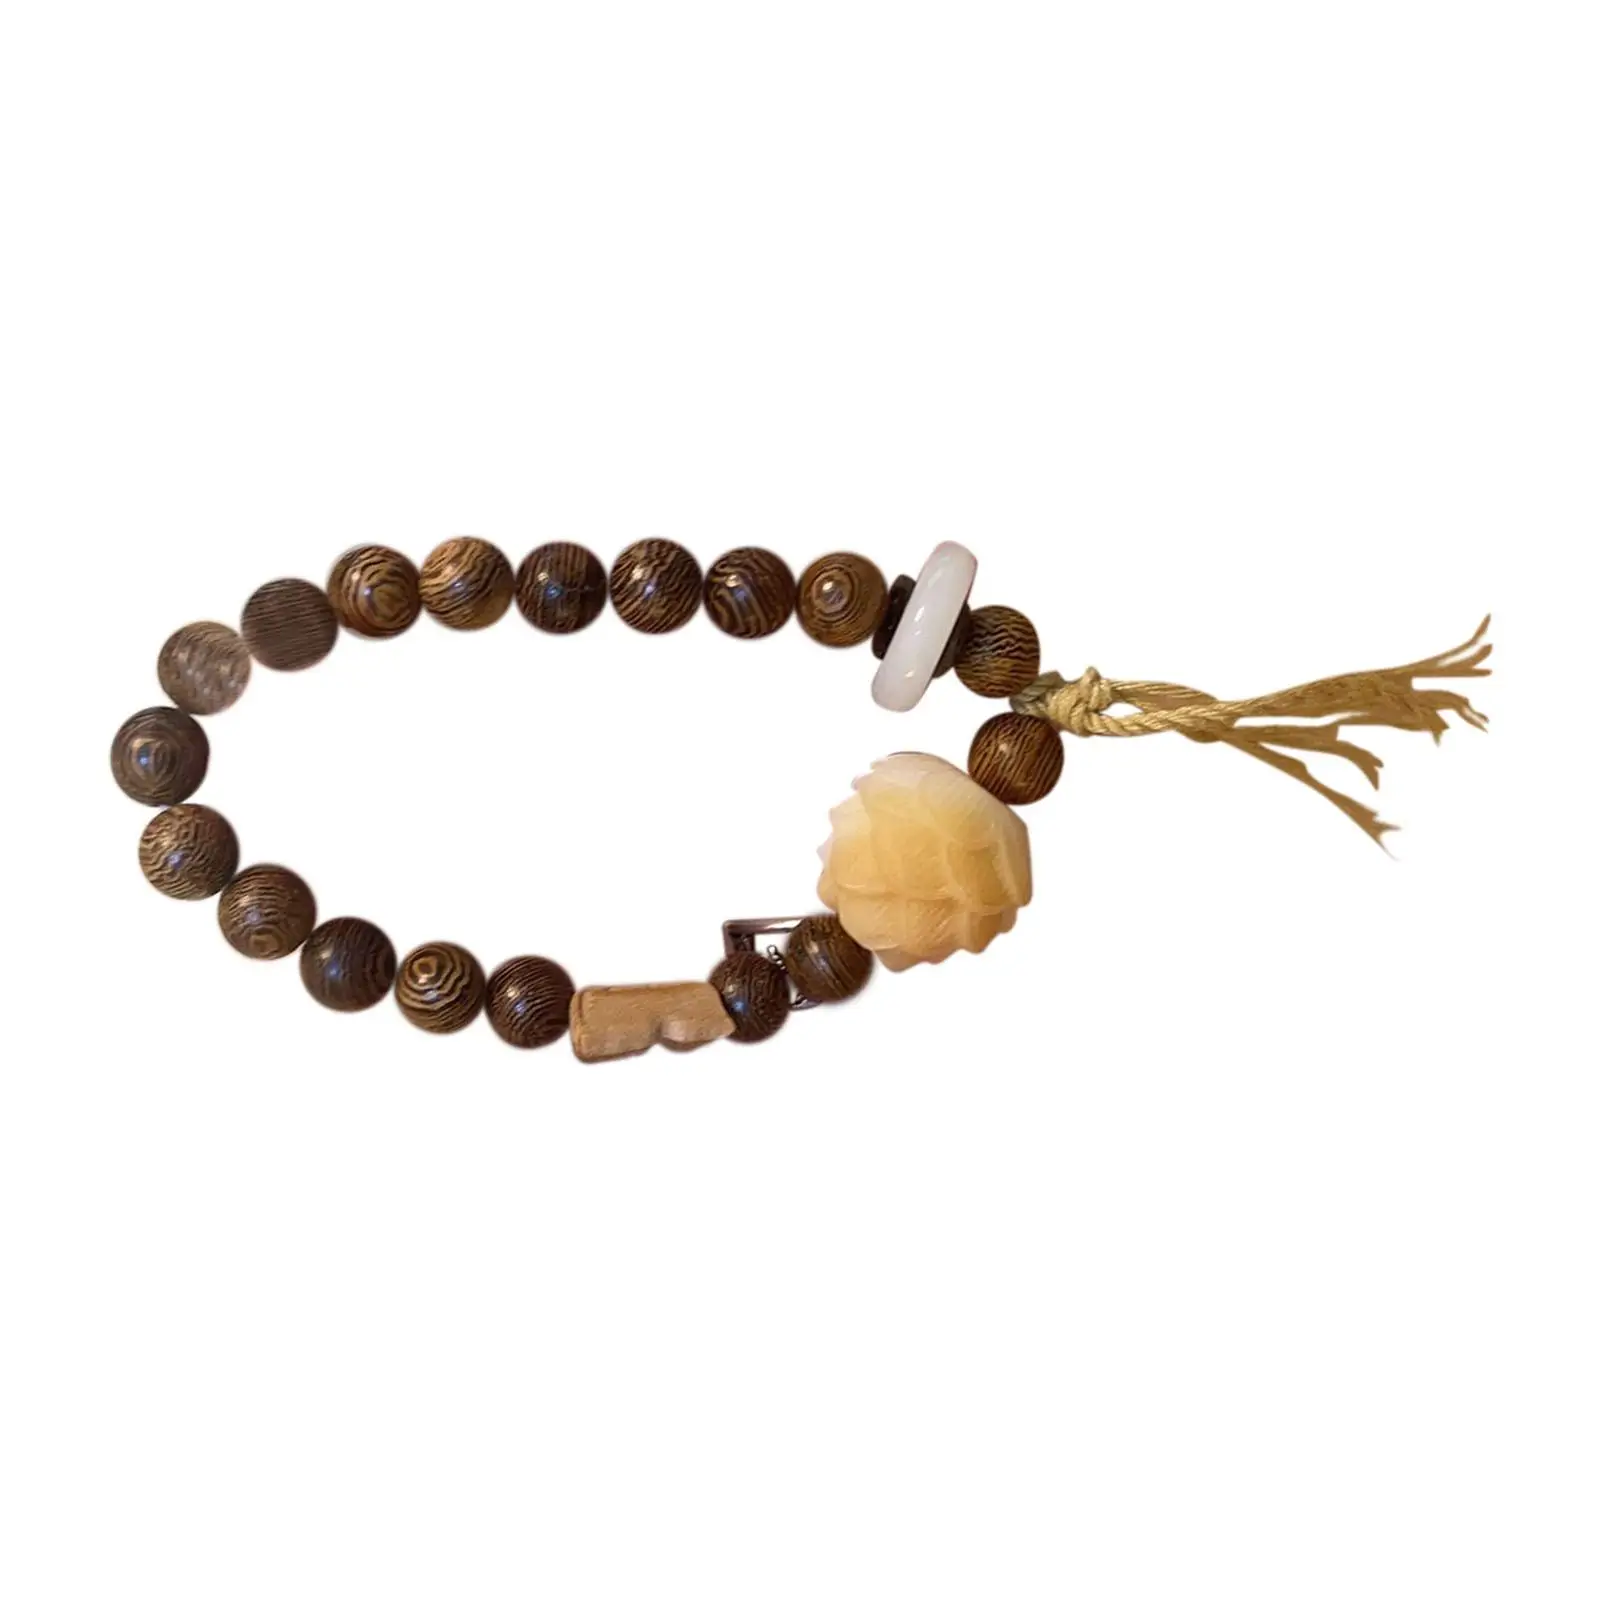 Wooden Beads Bracelet Prayer Bracelet for Men Women Jewelry Handmade Chicken Wing Wood Beads Bracelet Beaded Bracelet